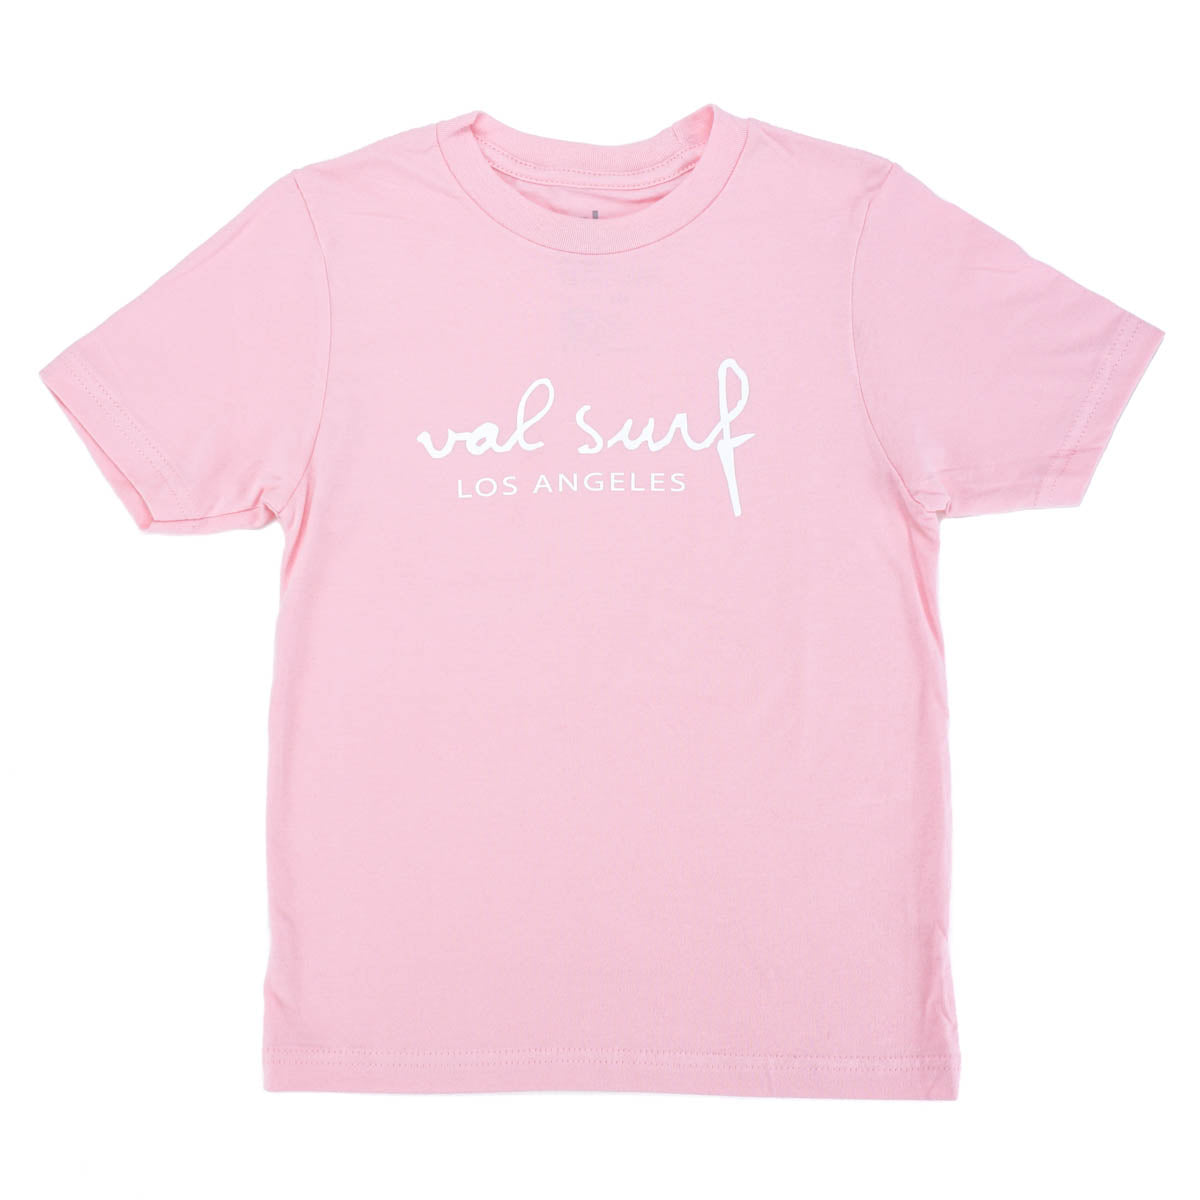 Girls Cursive Logo S/S Tee - Light Pink